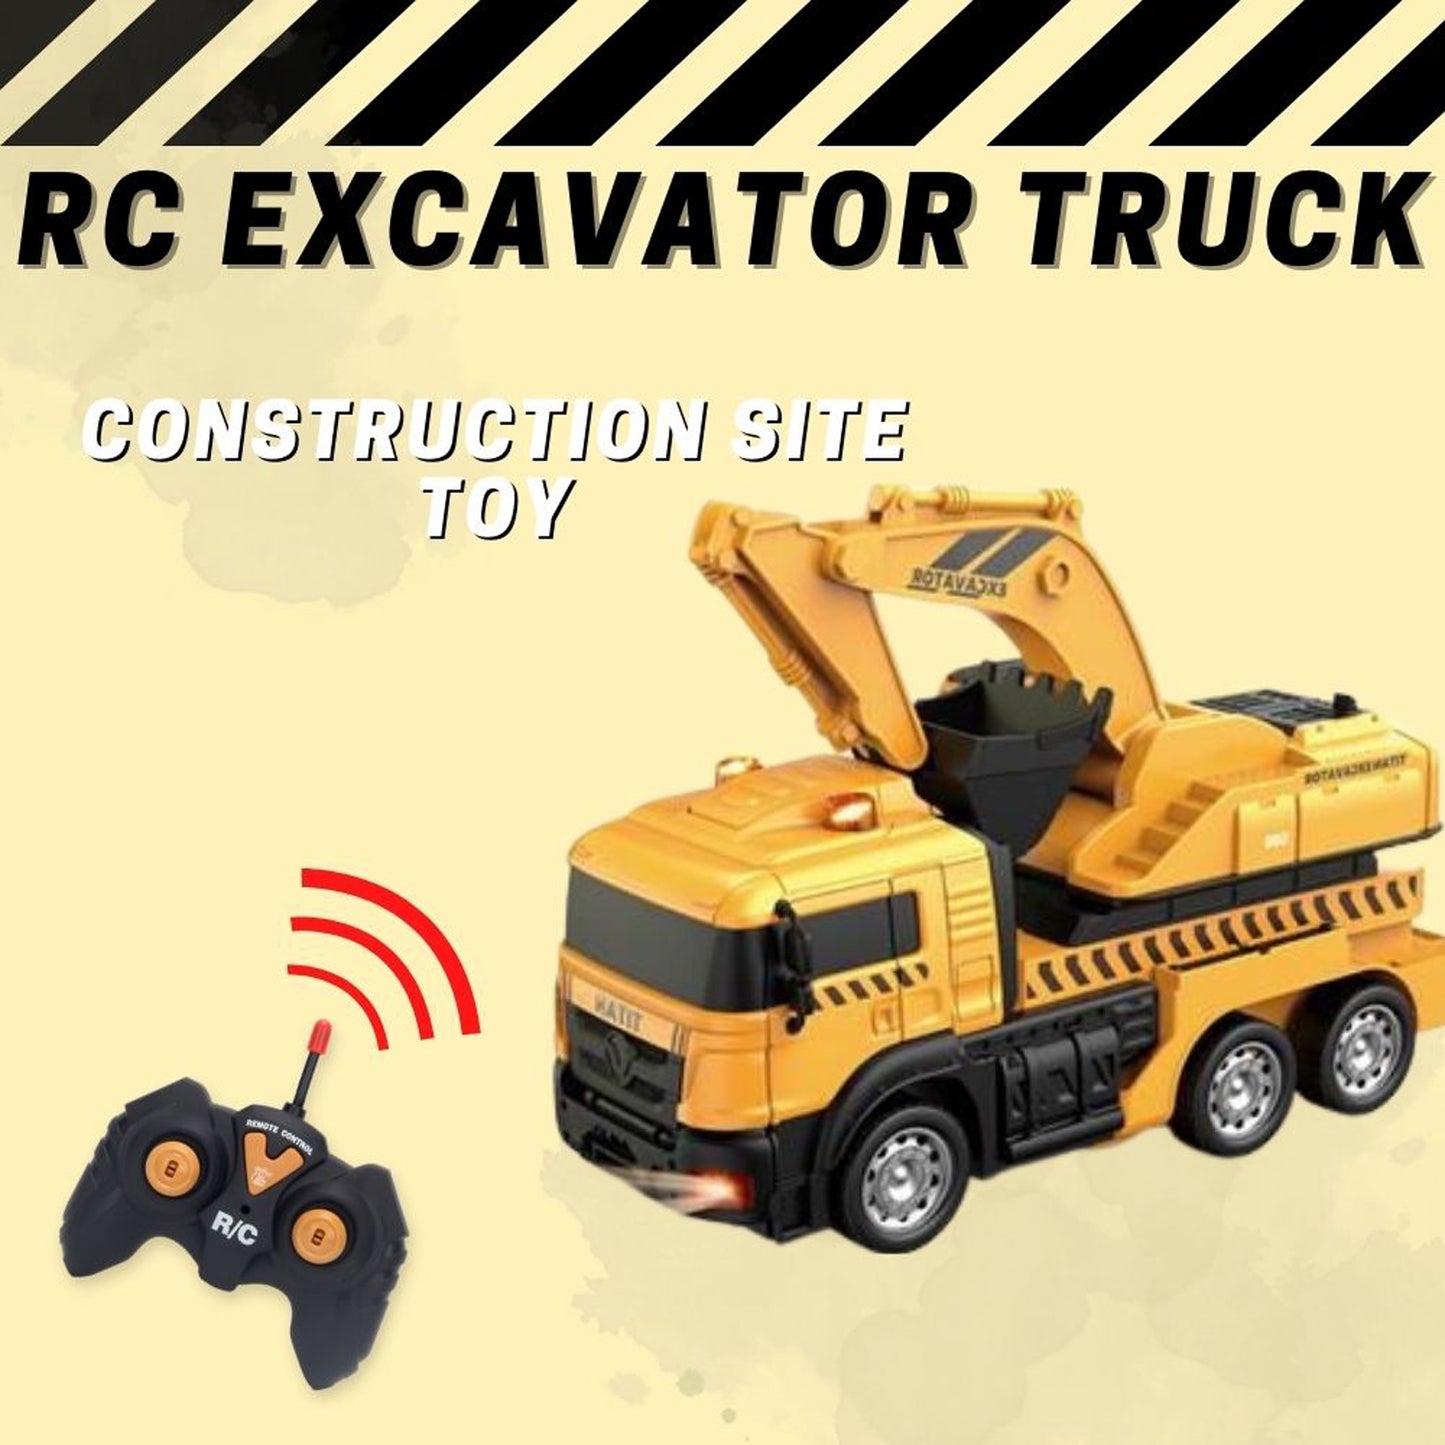 FITTO Remote Control Excavator Toy